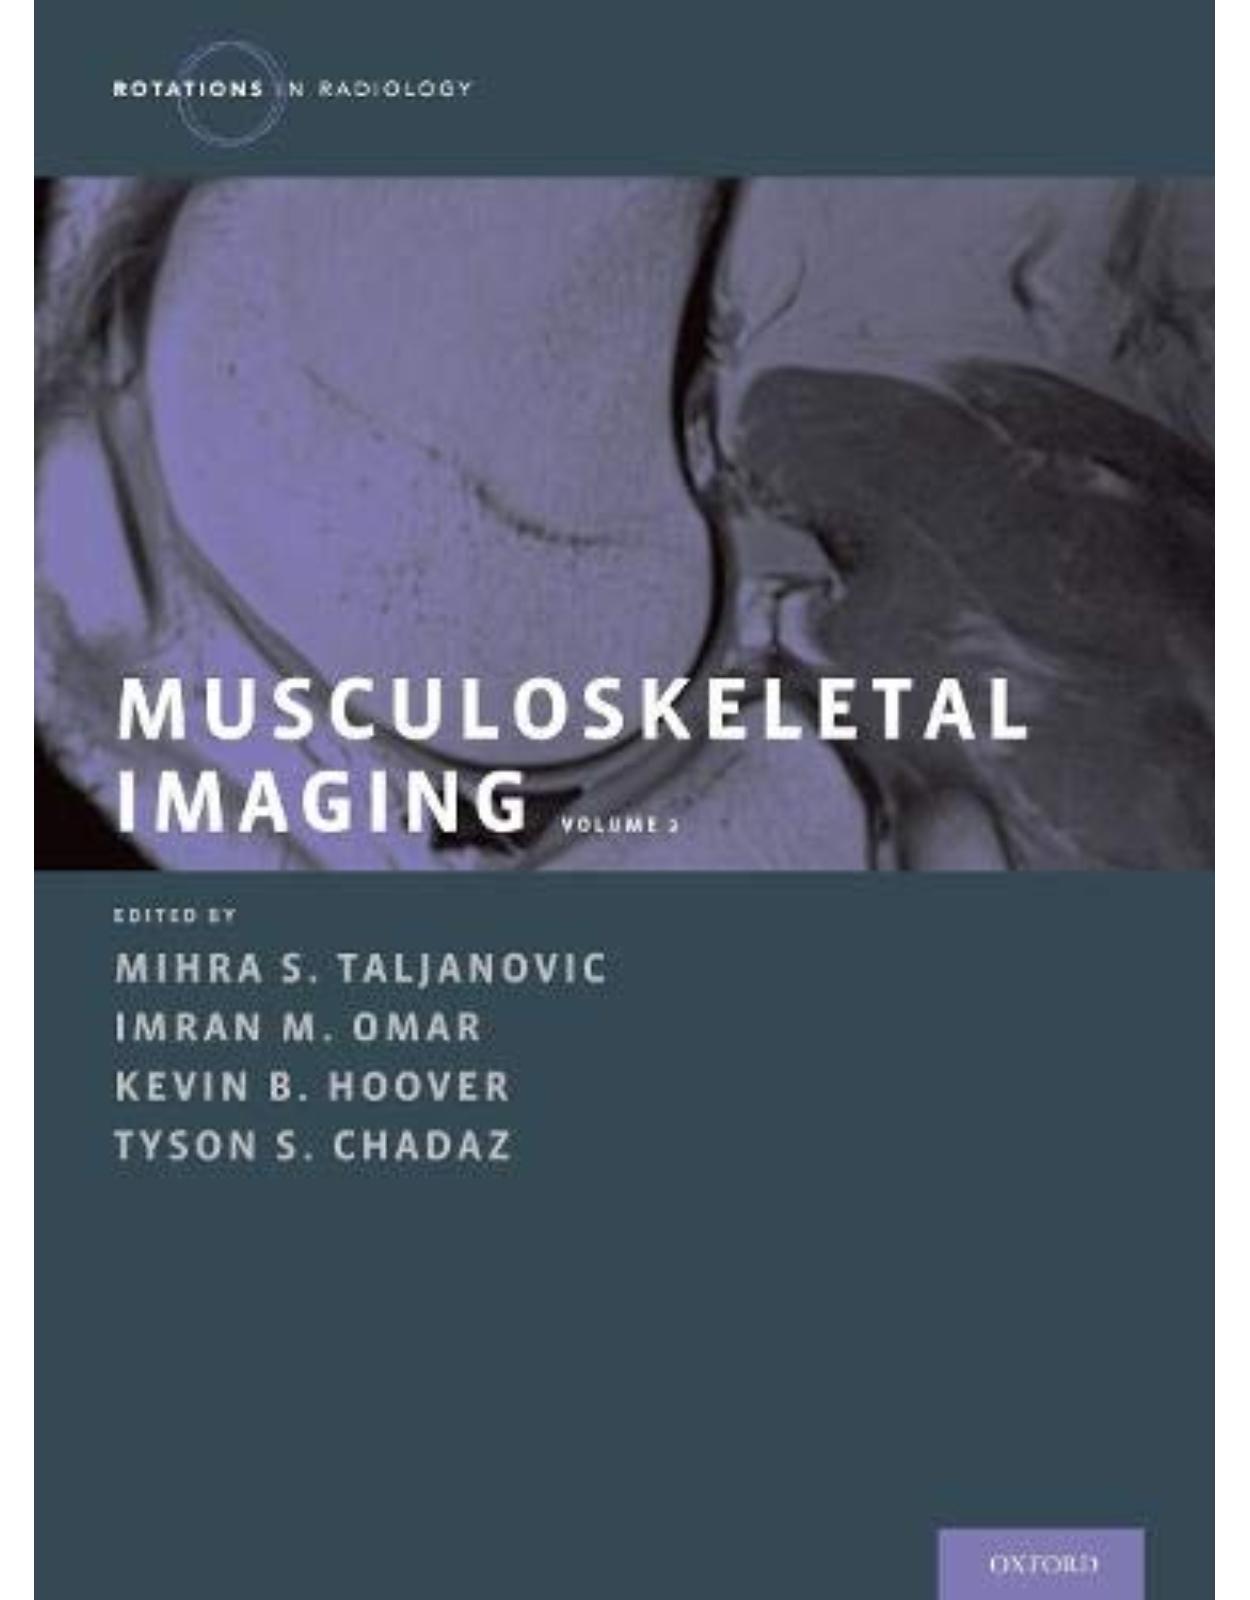 Musculoskeletal Imaging Volume 2